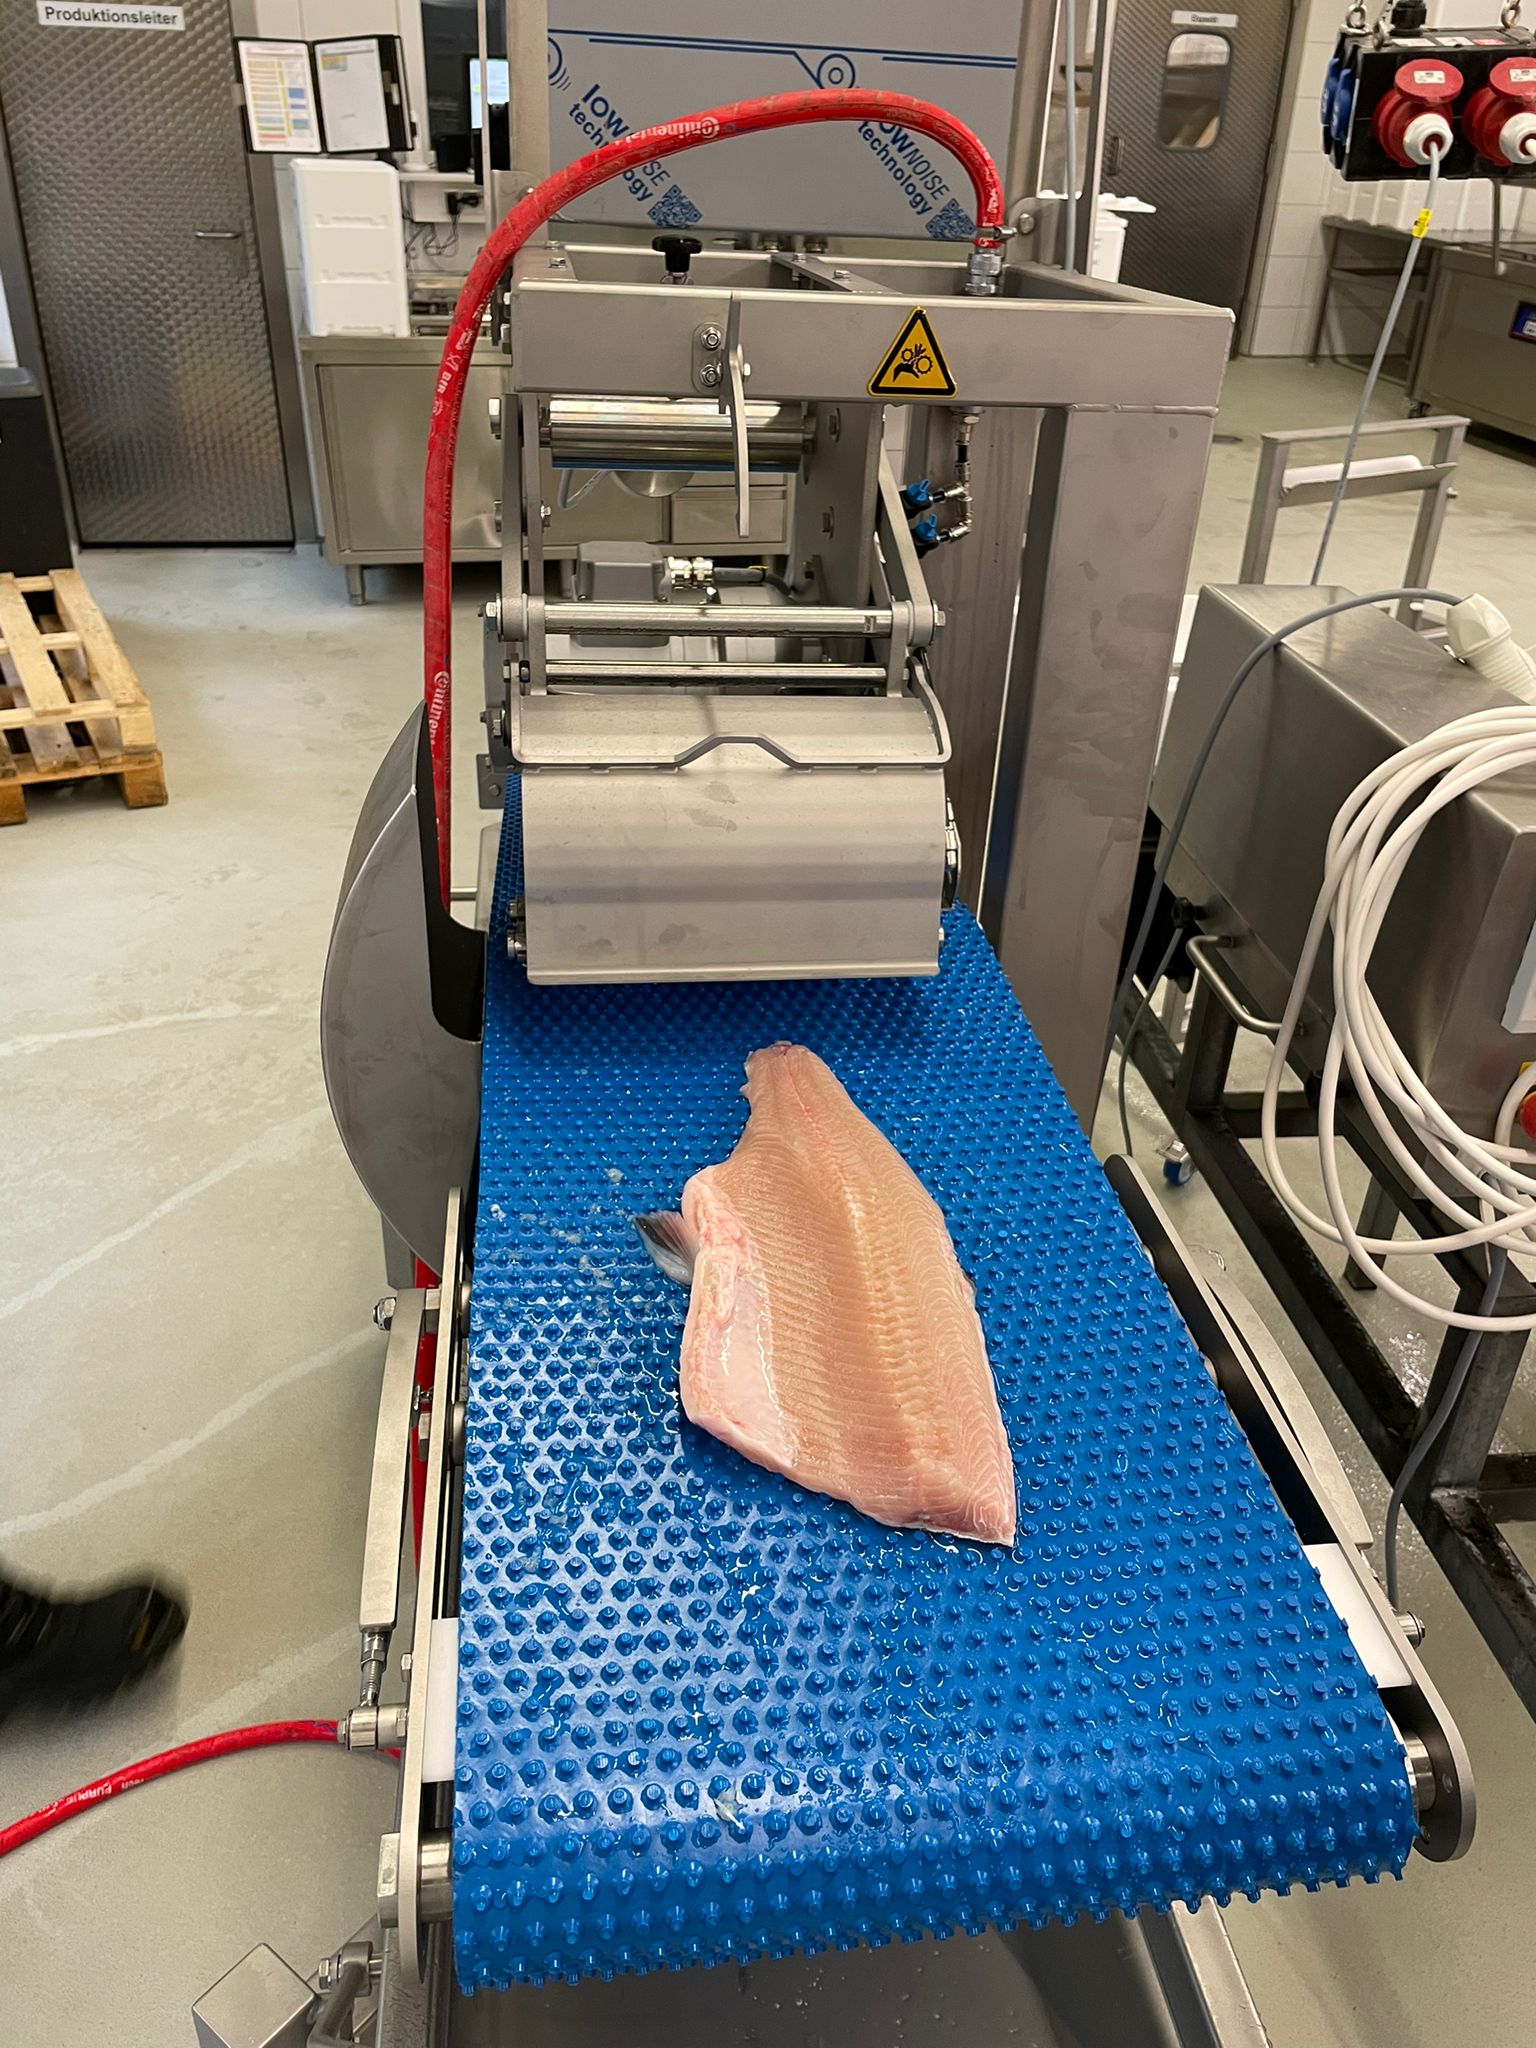 Processed fish on conveyor belt